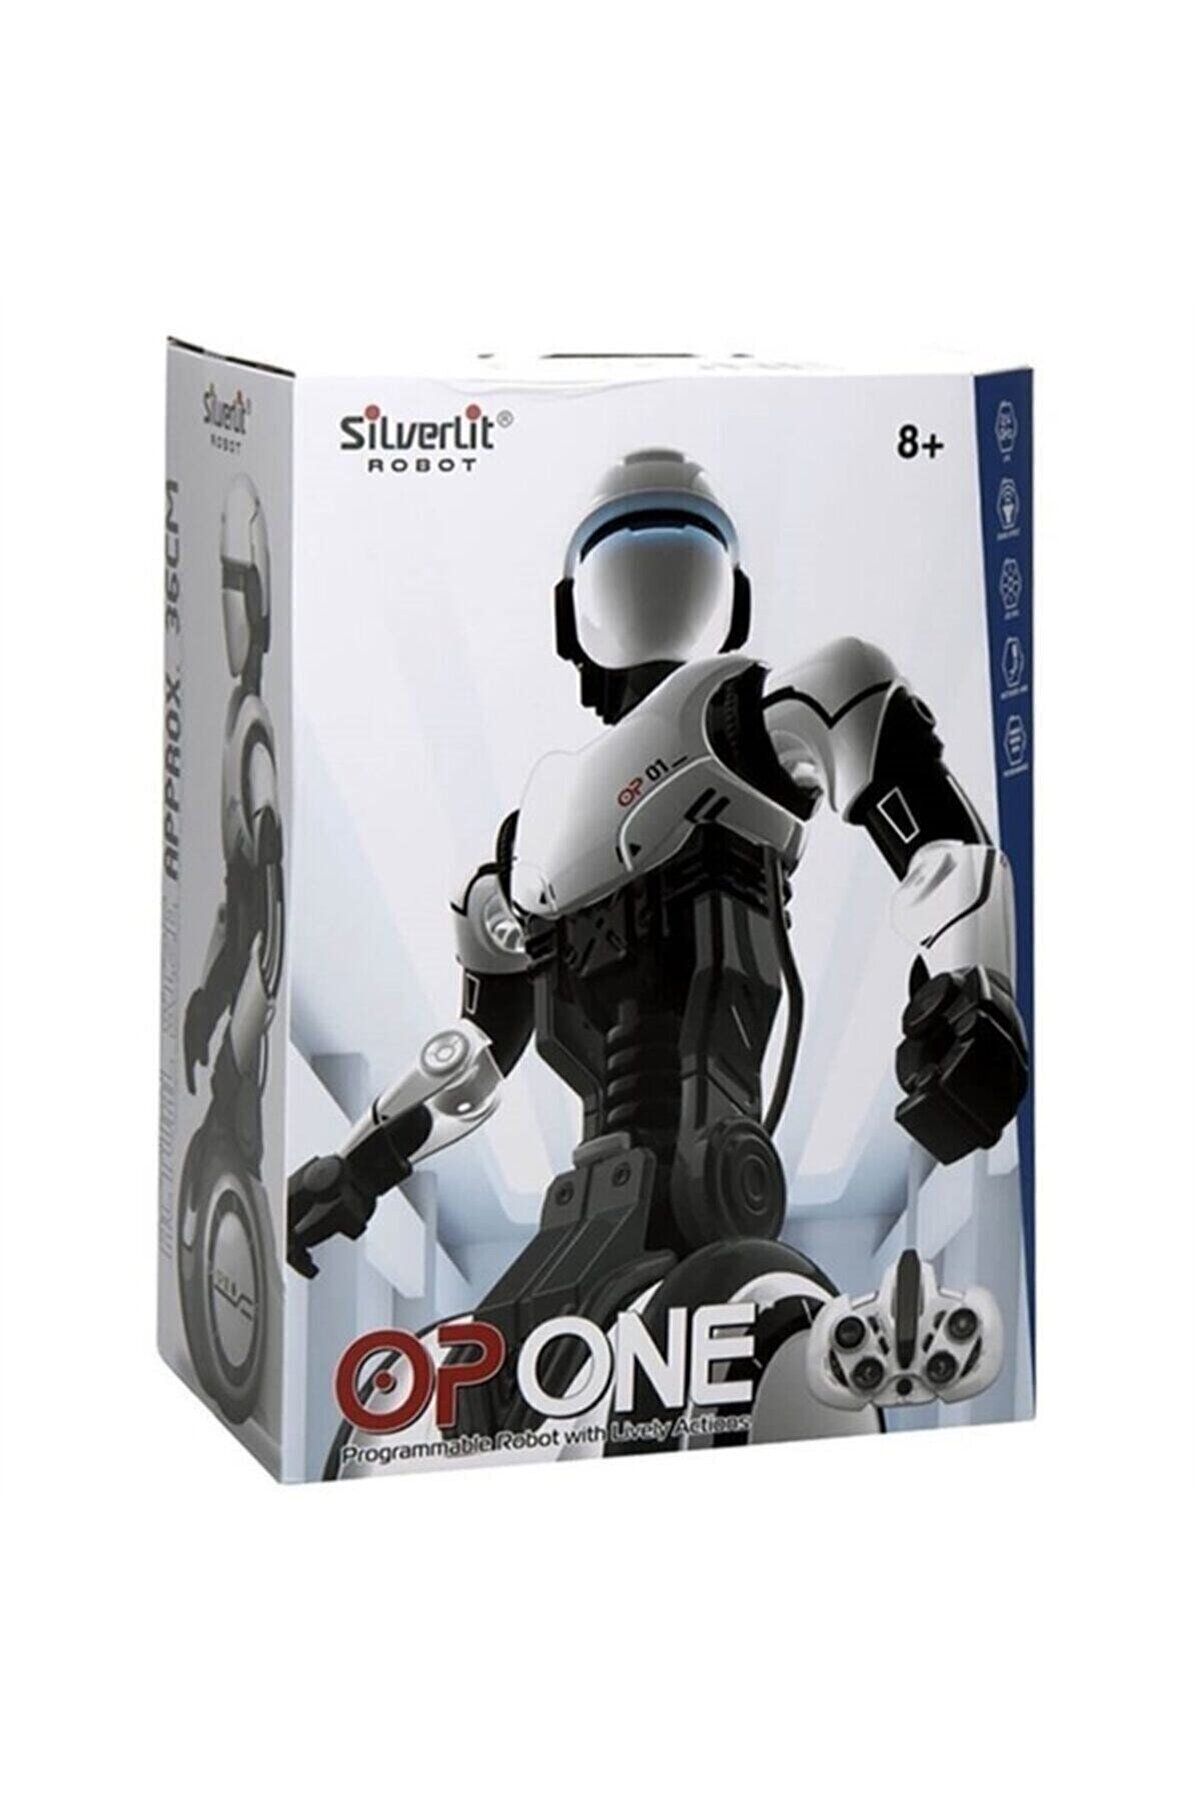 Silverlit Op One Robot